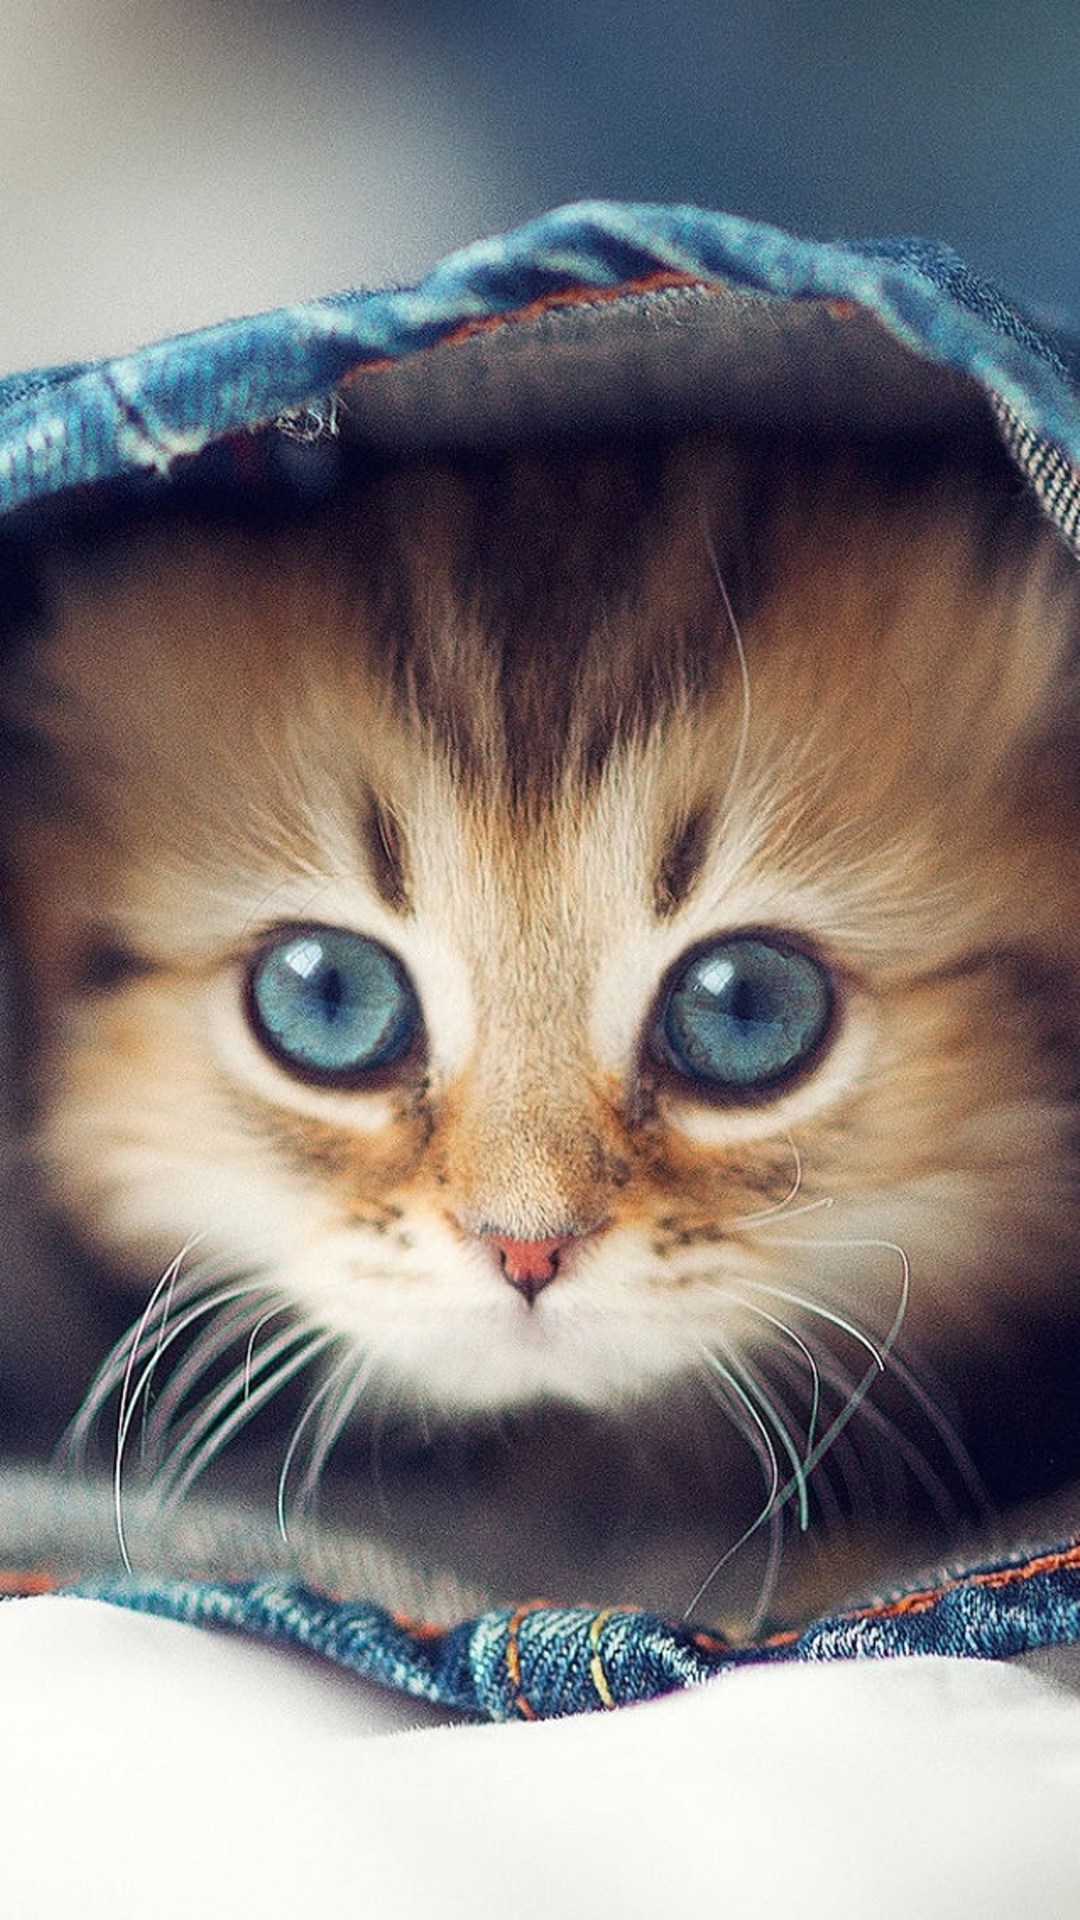 صور اجمل صور قطط صغيره احدث صور قطط صغيره كيوت , صورة قطة مضحكة اجمل